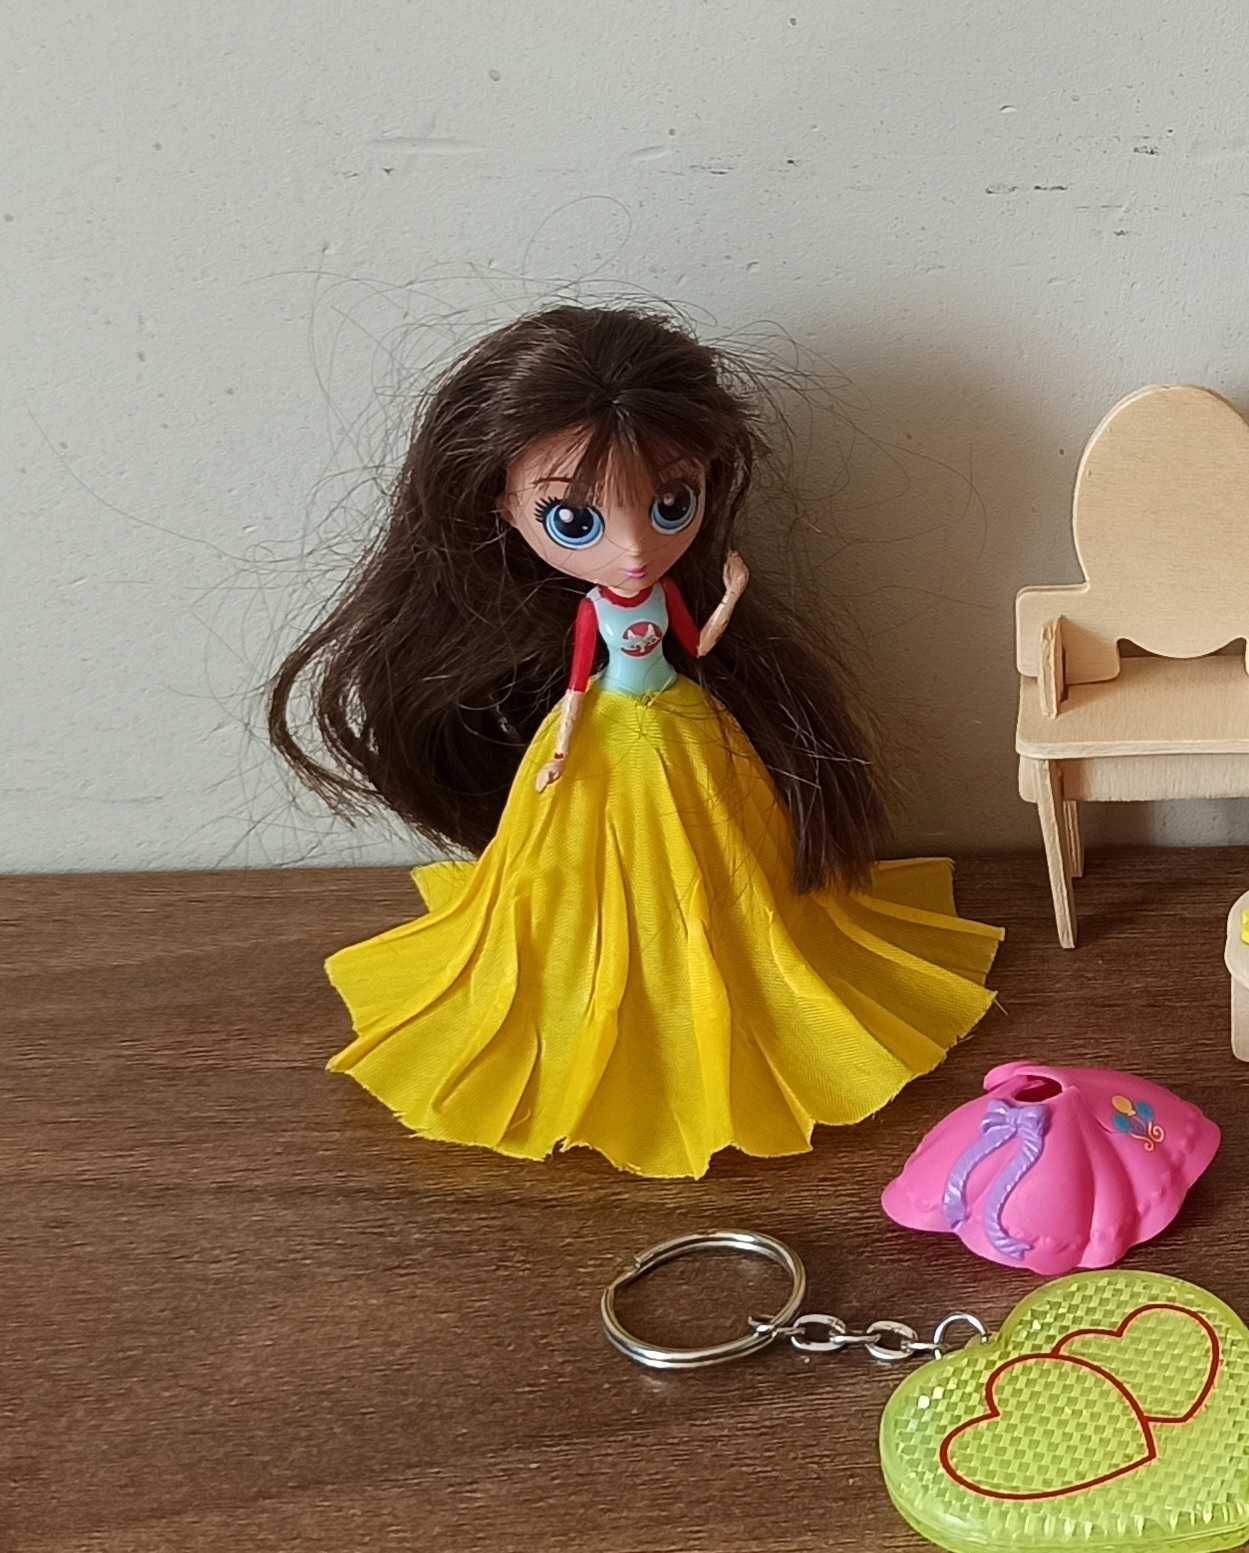 zabawki dla dziewczynki zestaw lalka + mebelki + skakanka + slajm